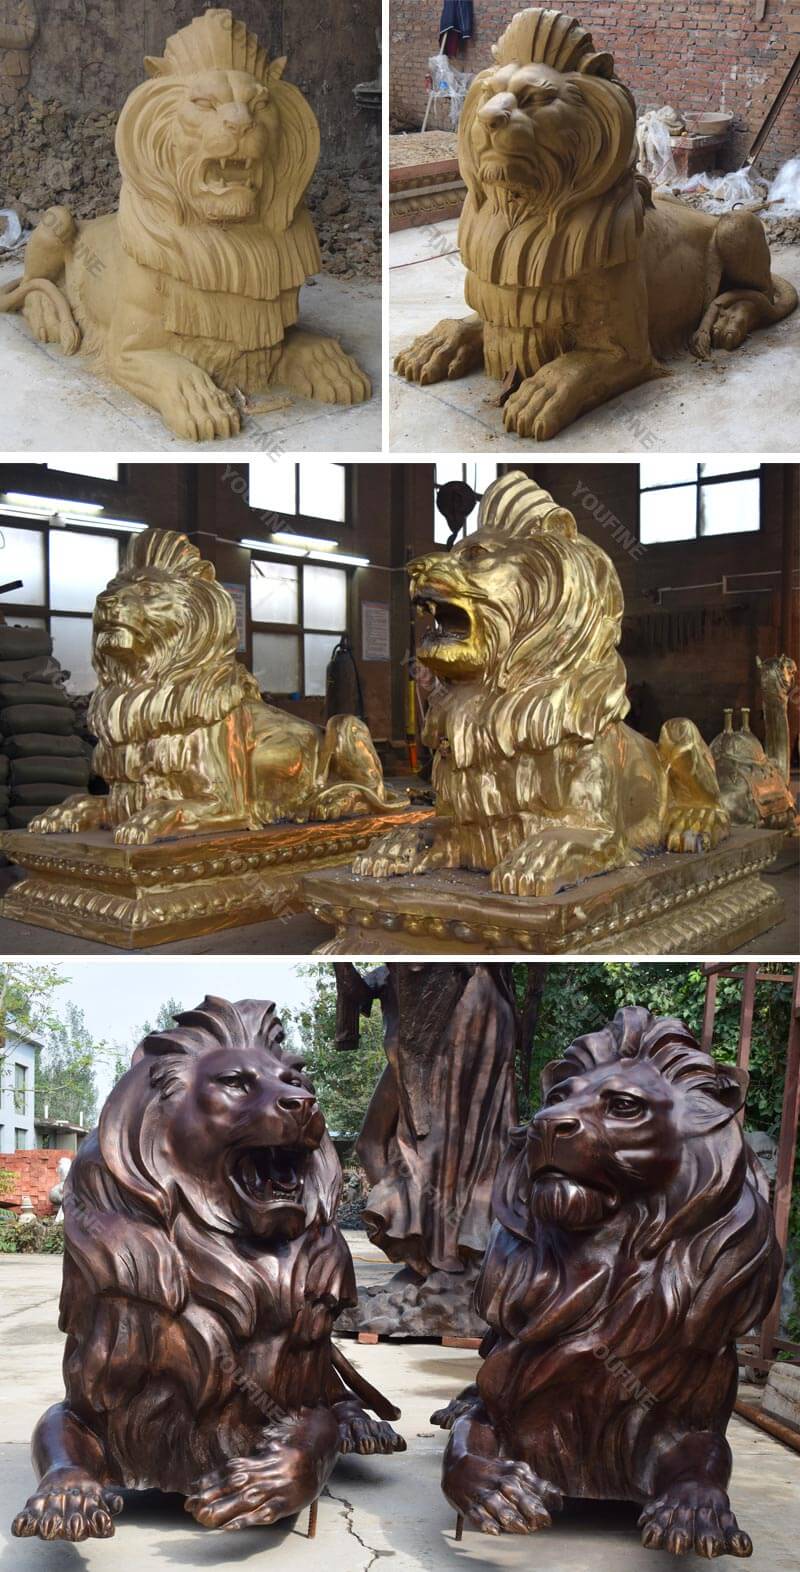 Hot-selling Modern Garden Decoration Large Bronze Lion Sculpture Animal Sculpture